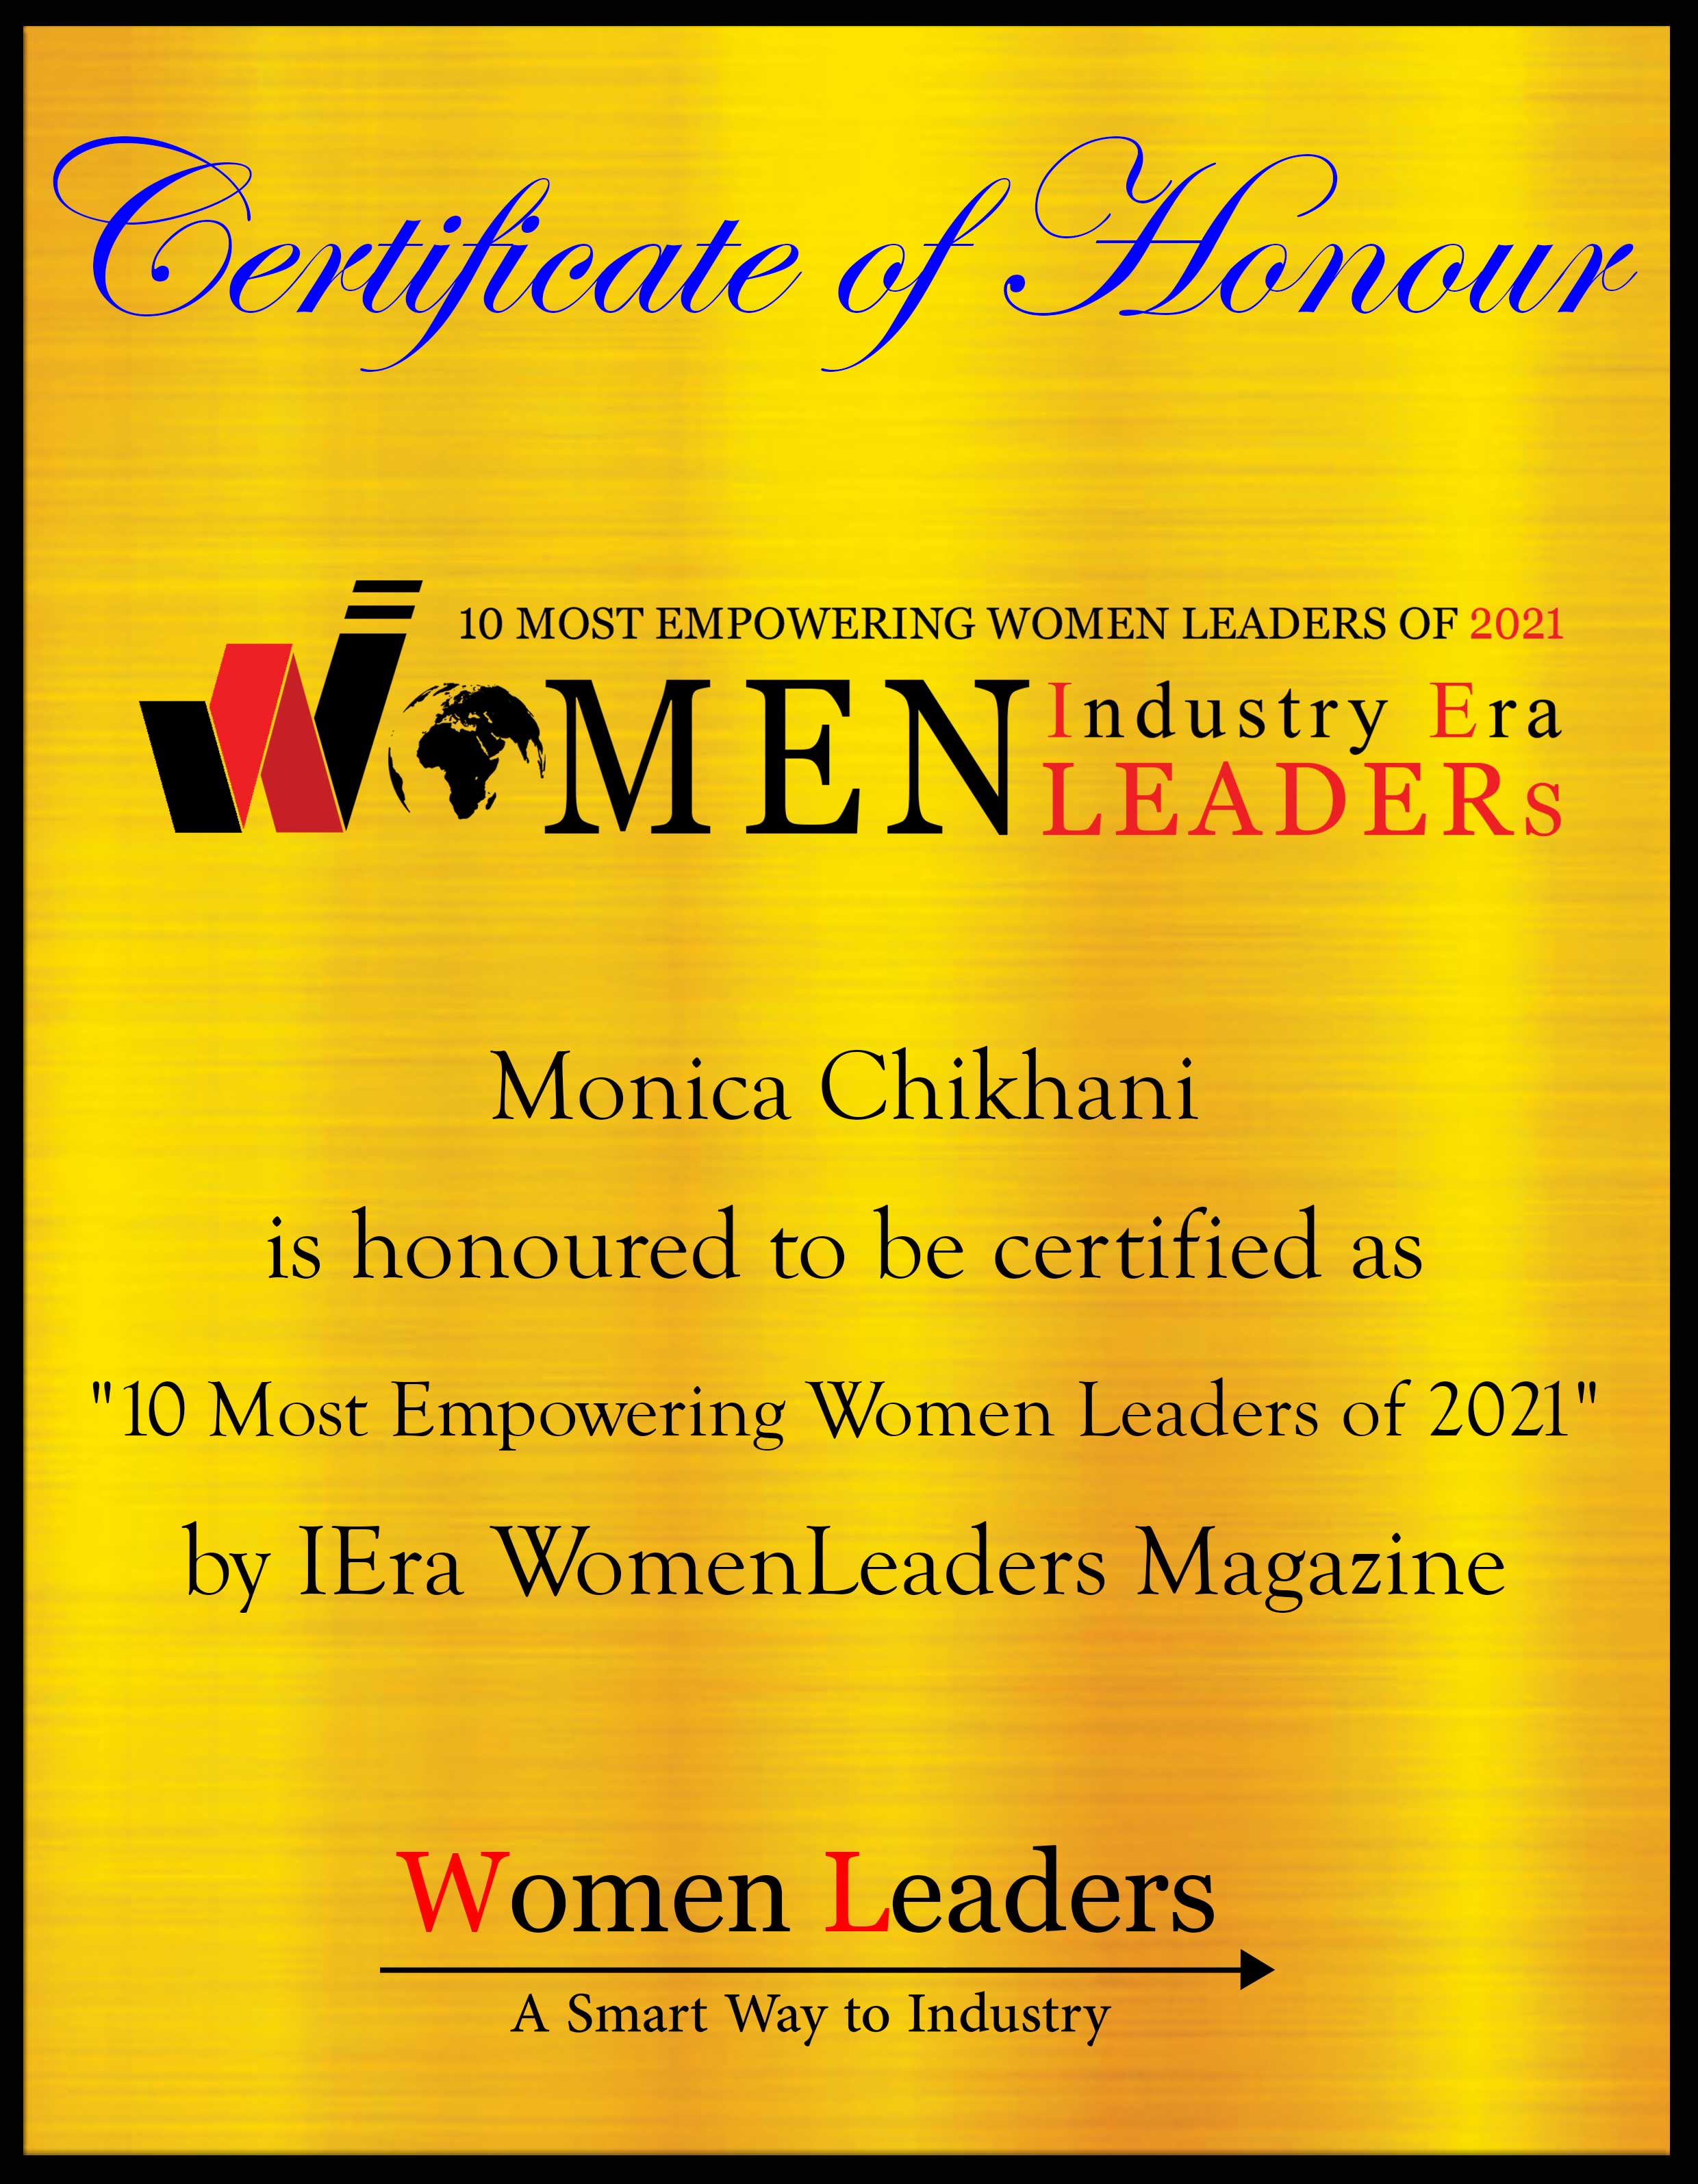 Monica Chikhani, CVO / Founder of MECworkshop, Most Empowering Women Leaders of 2021